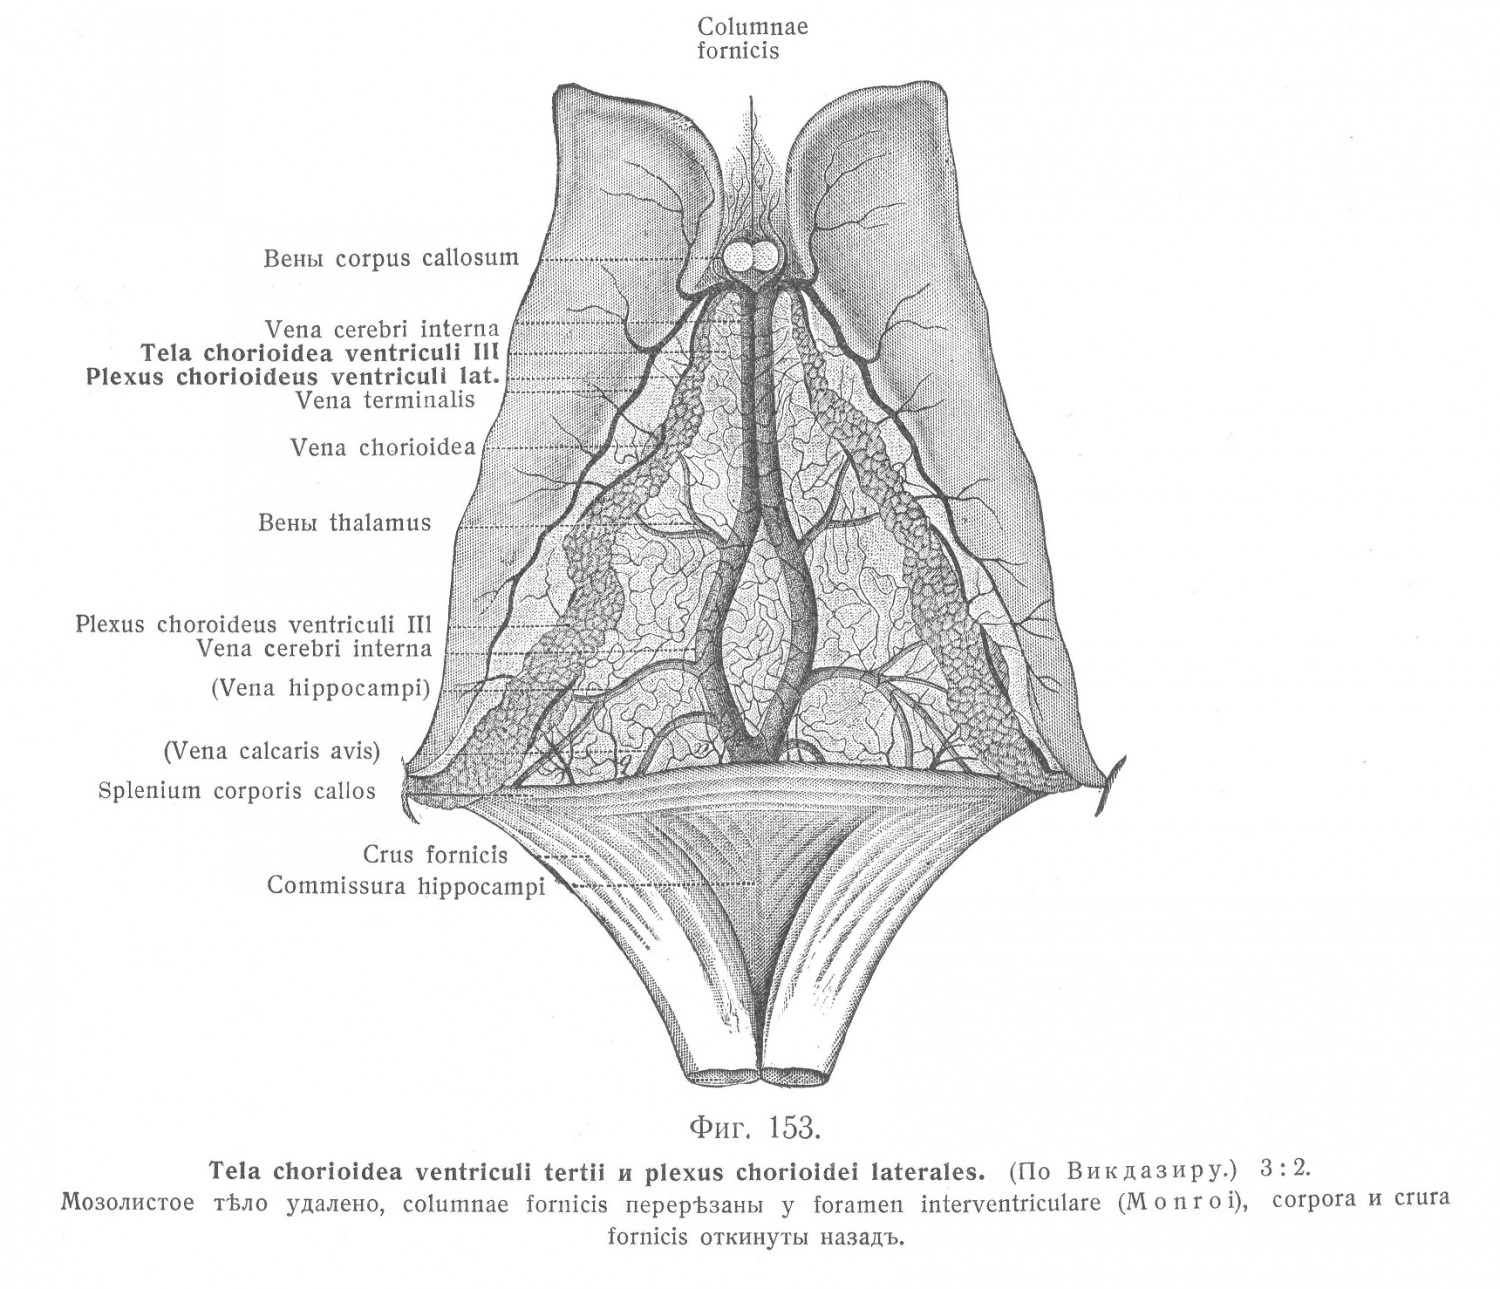 Tela chorioidea ventriculi tertii